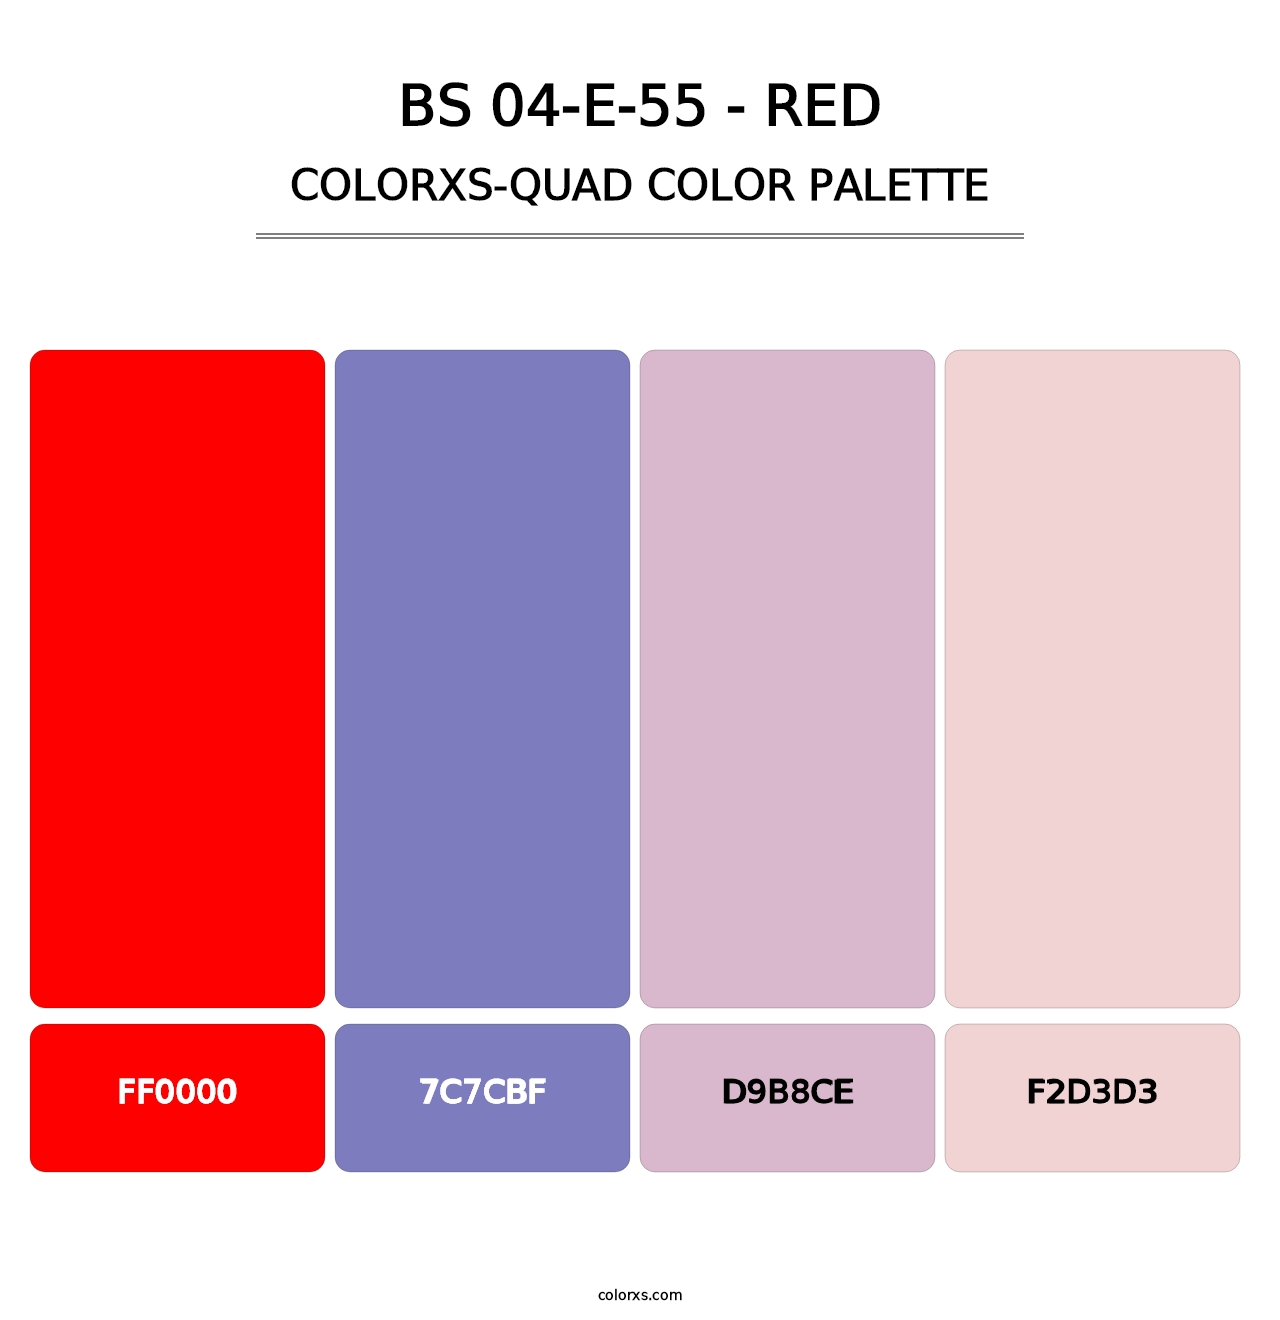 BS 04-E-55 - Red - Colorxs Quad Palette